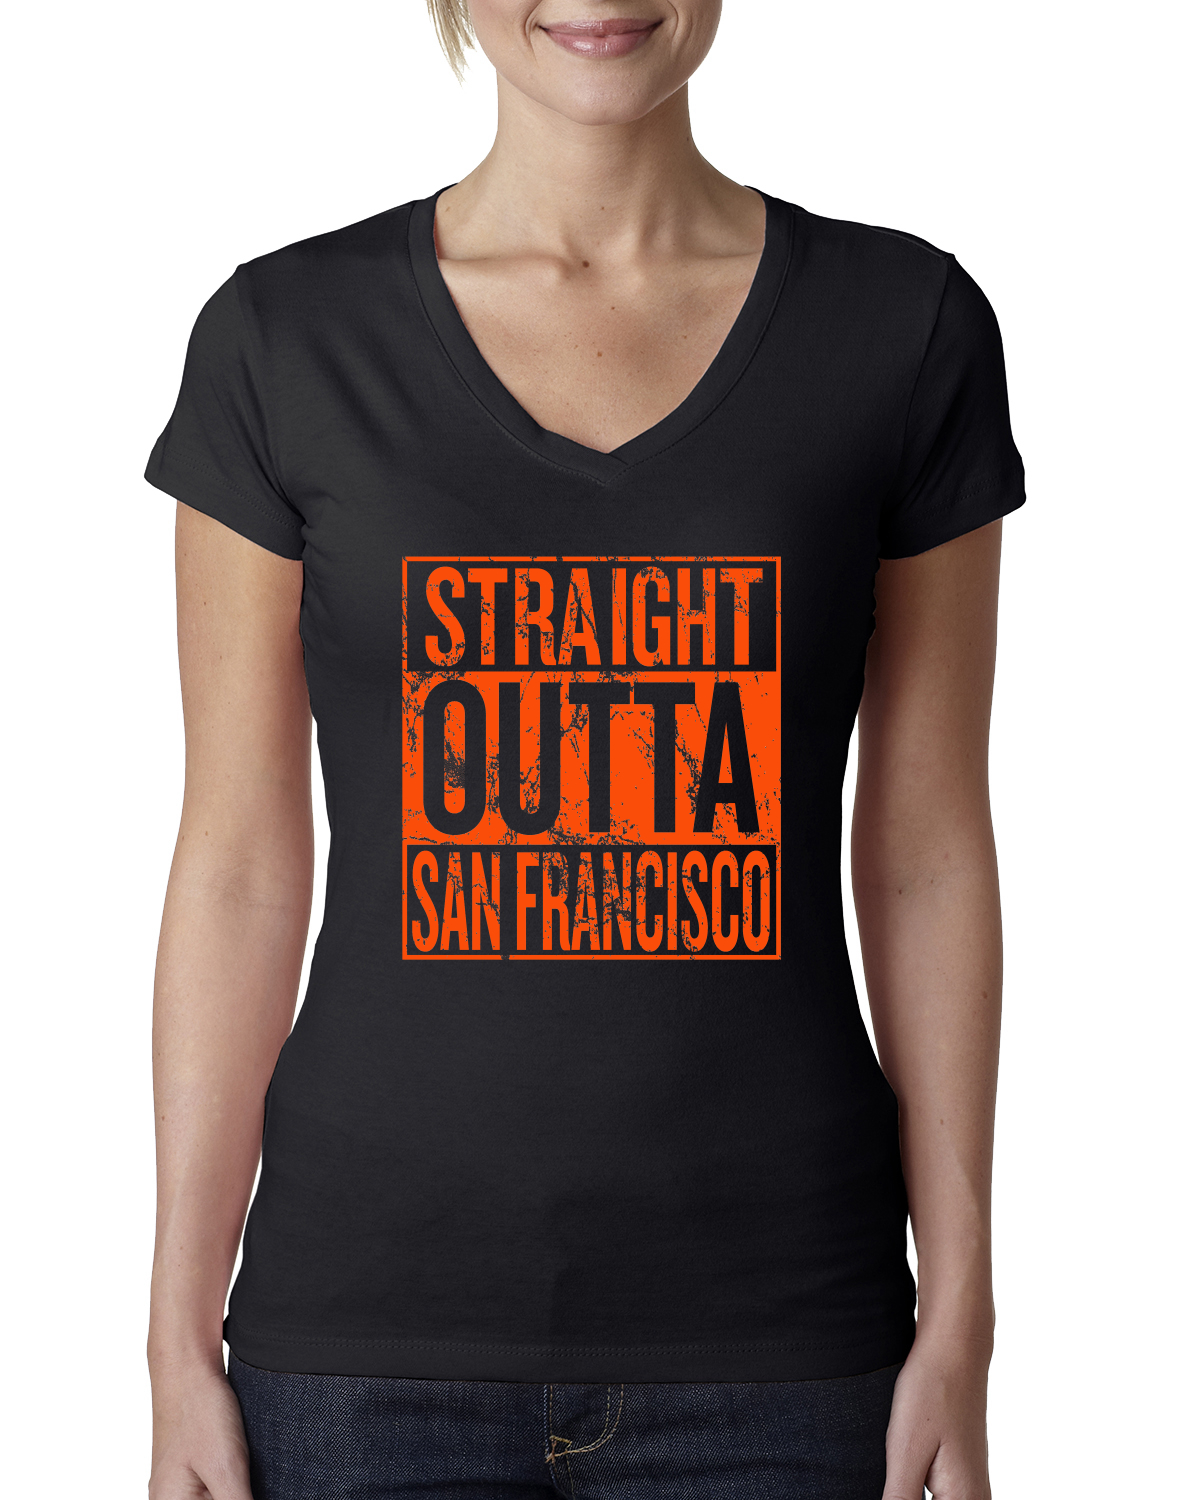 Straight Outta San Francisco SF Fan | Fantasy Baseball Fans | Womens Sports Slim Fit Junior V-Neck Tee, Black, Small - image 1 of 4